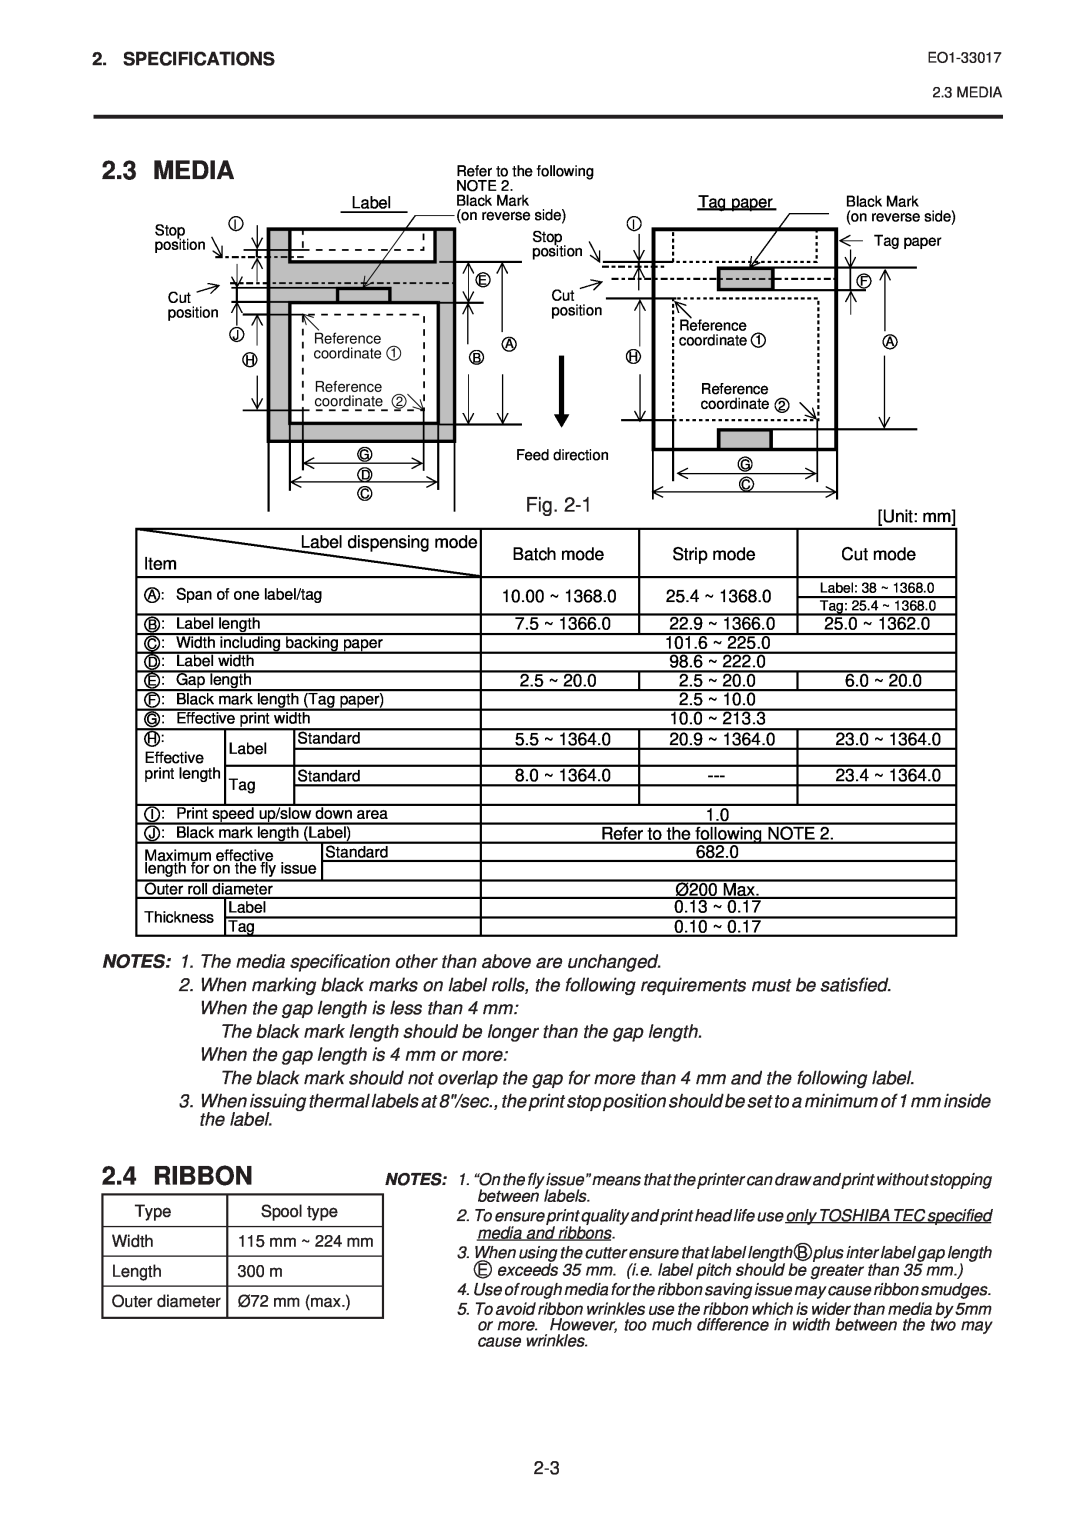 Toshiba B-880-QQ SERIES owner manual Media, Ribbon, Specifications 